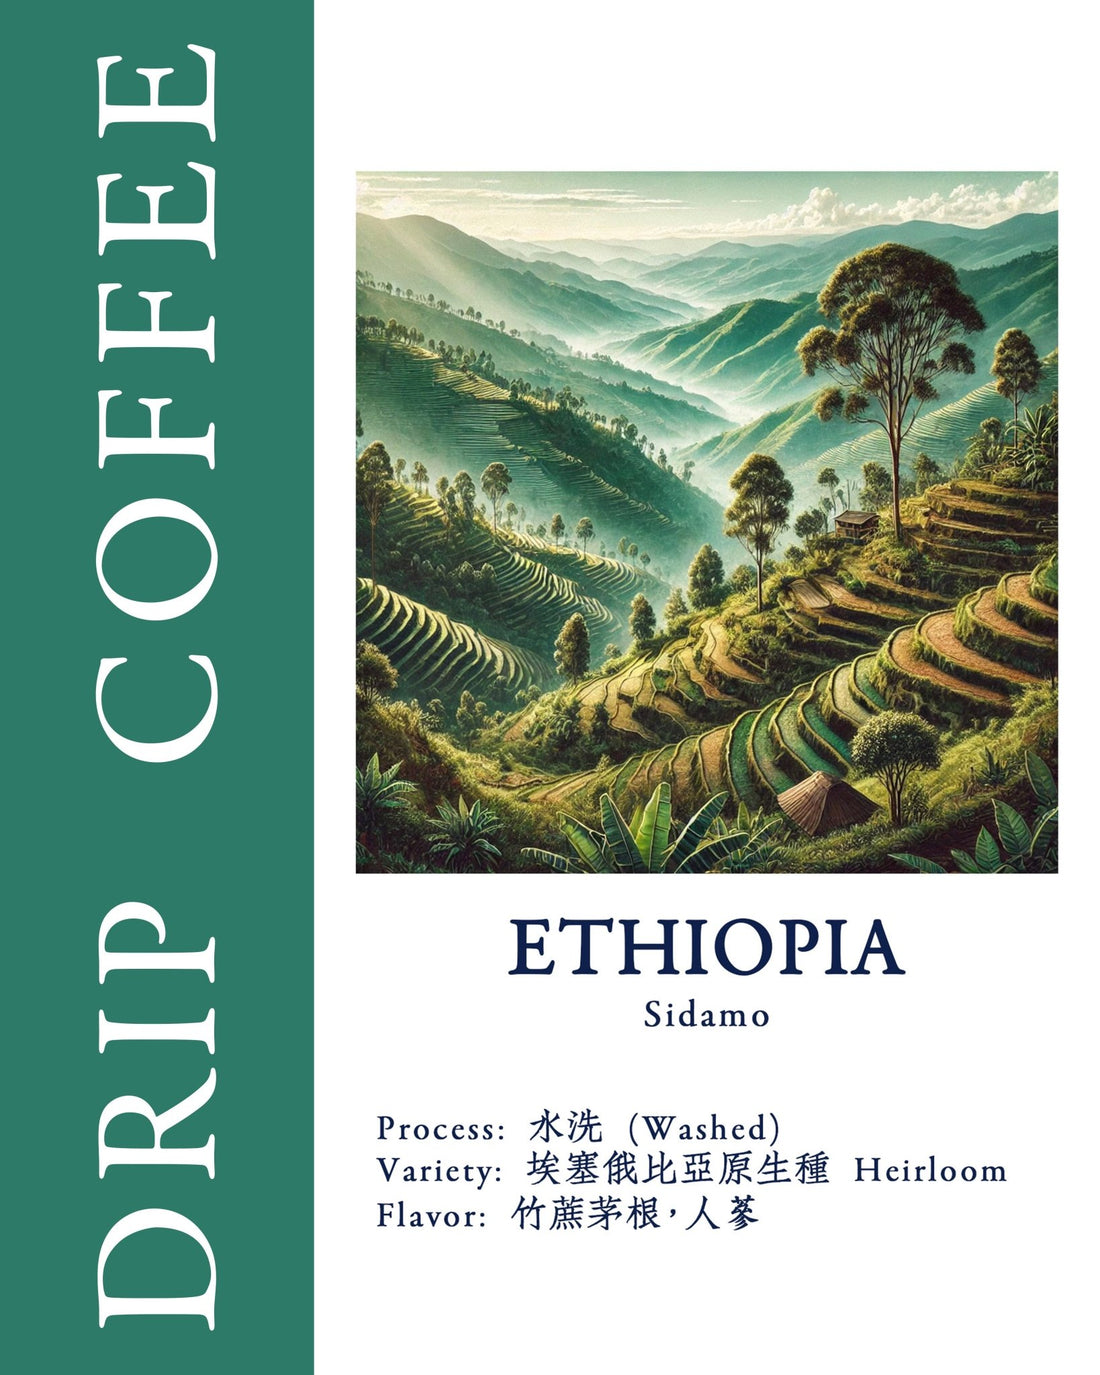 【Sidamo Sidamo】Ethiopia｜Light Roast｜G1｜Washed｜Taste Lightly Sip Coffee